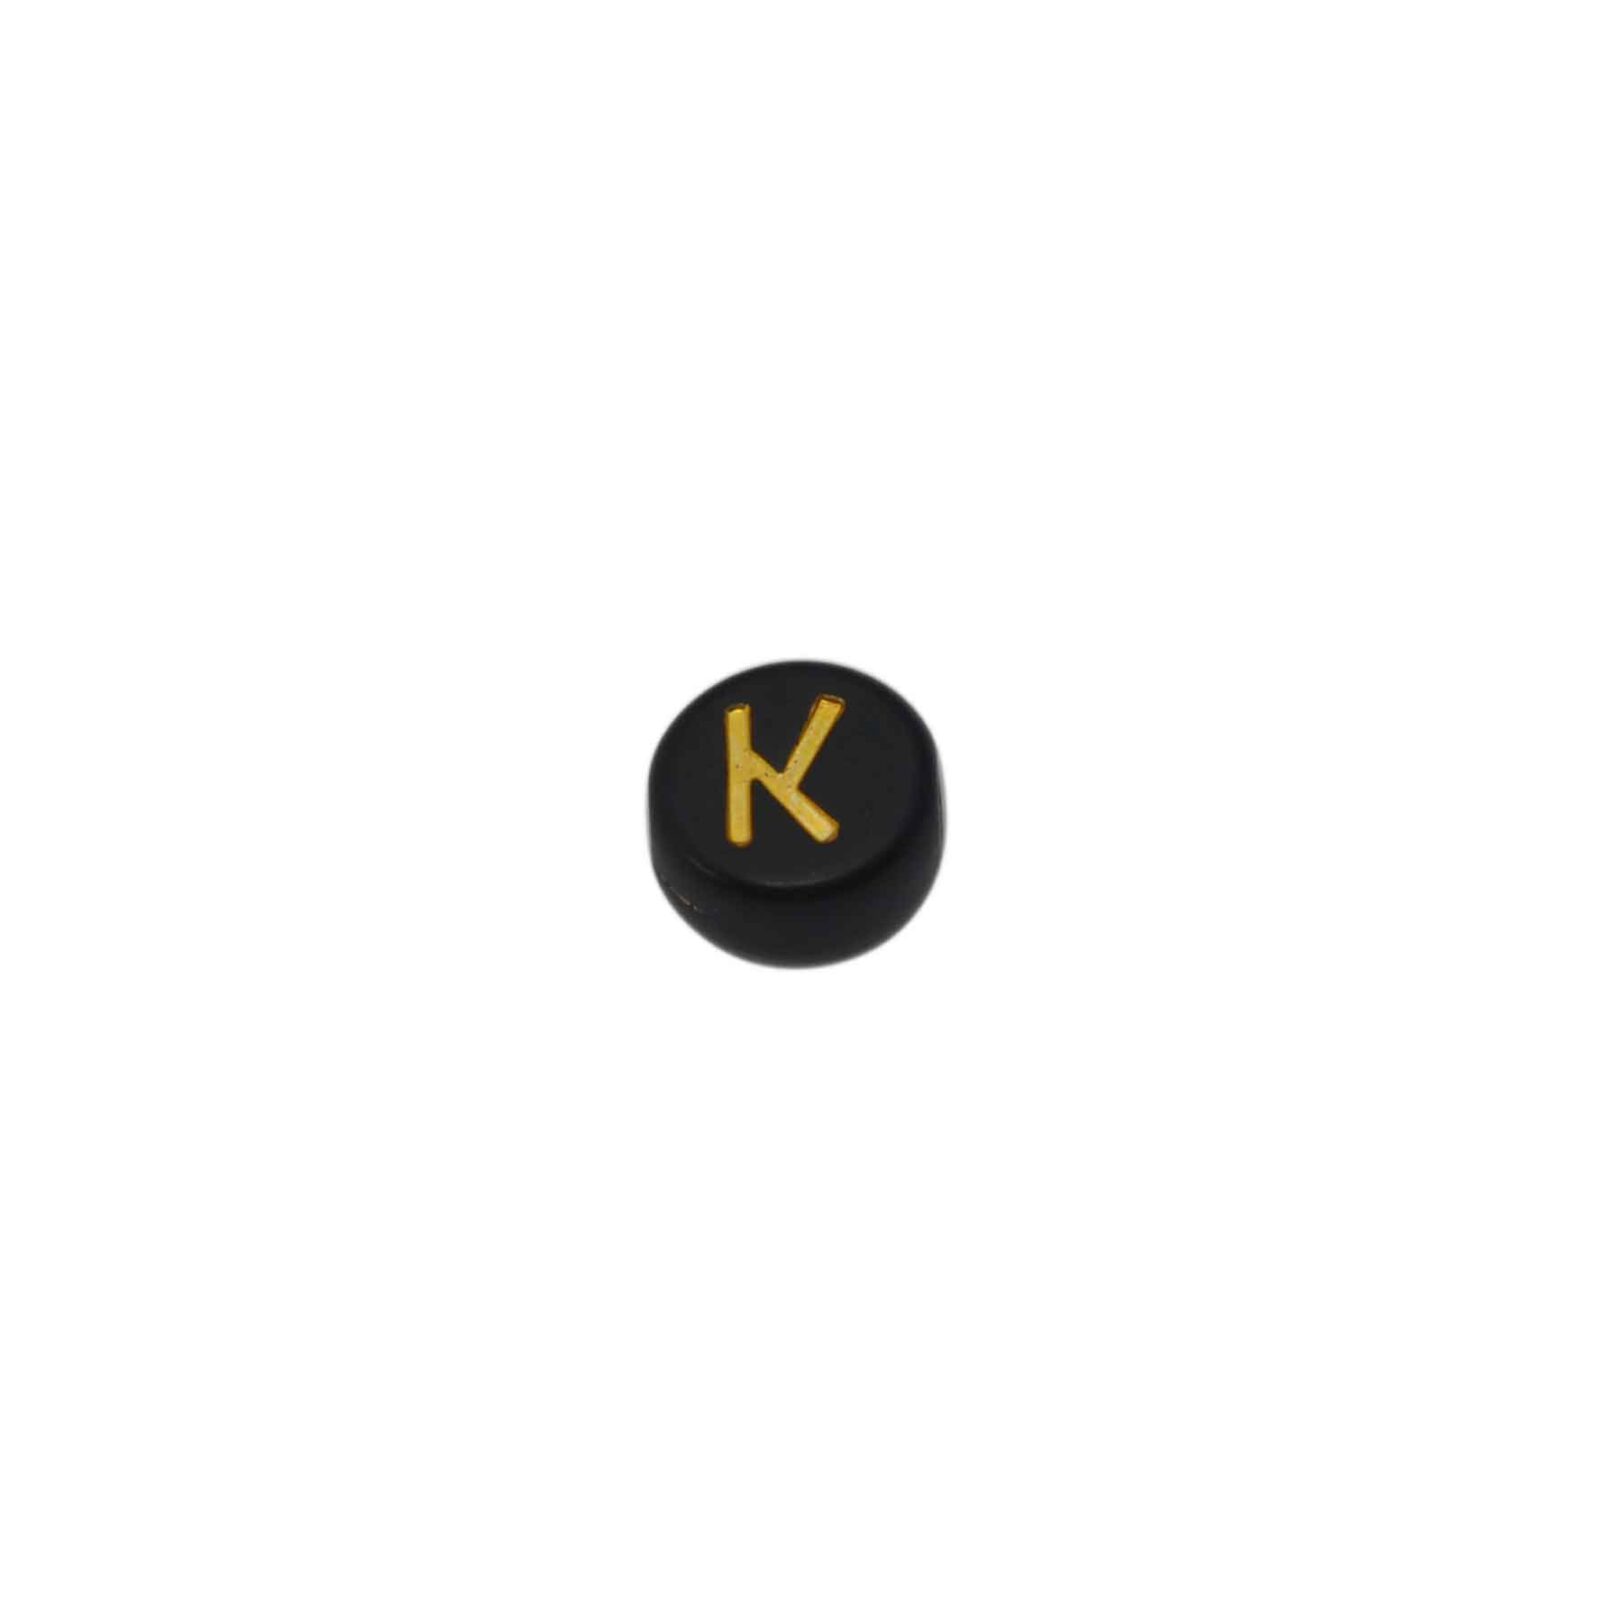 Zwarte ronde letterkraal K